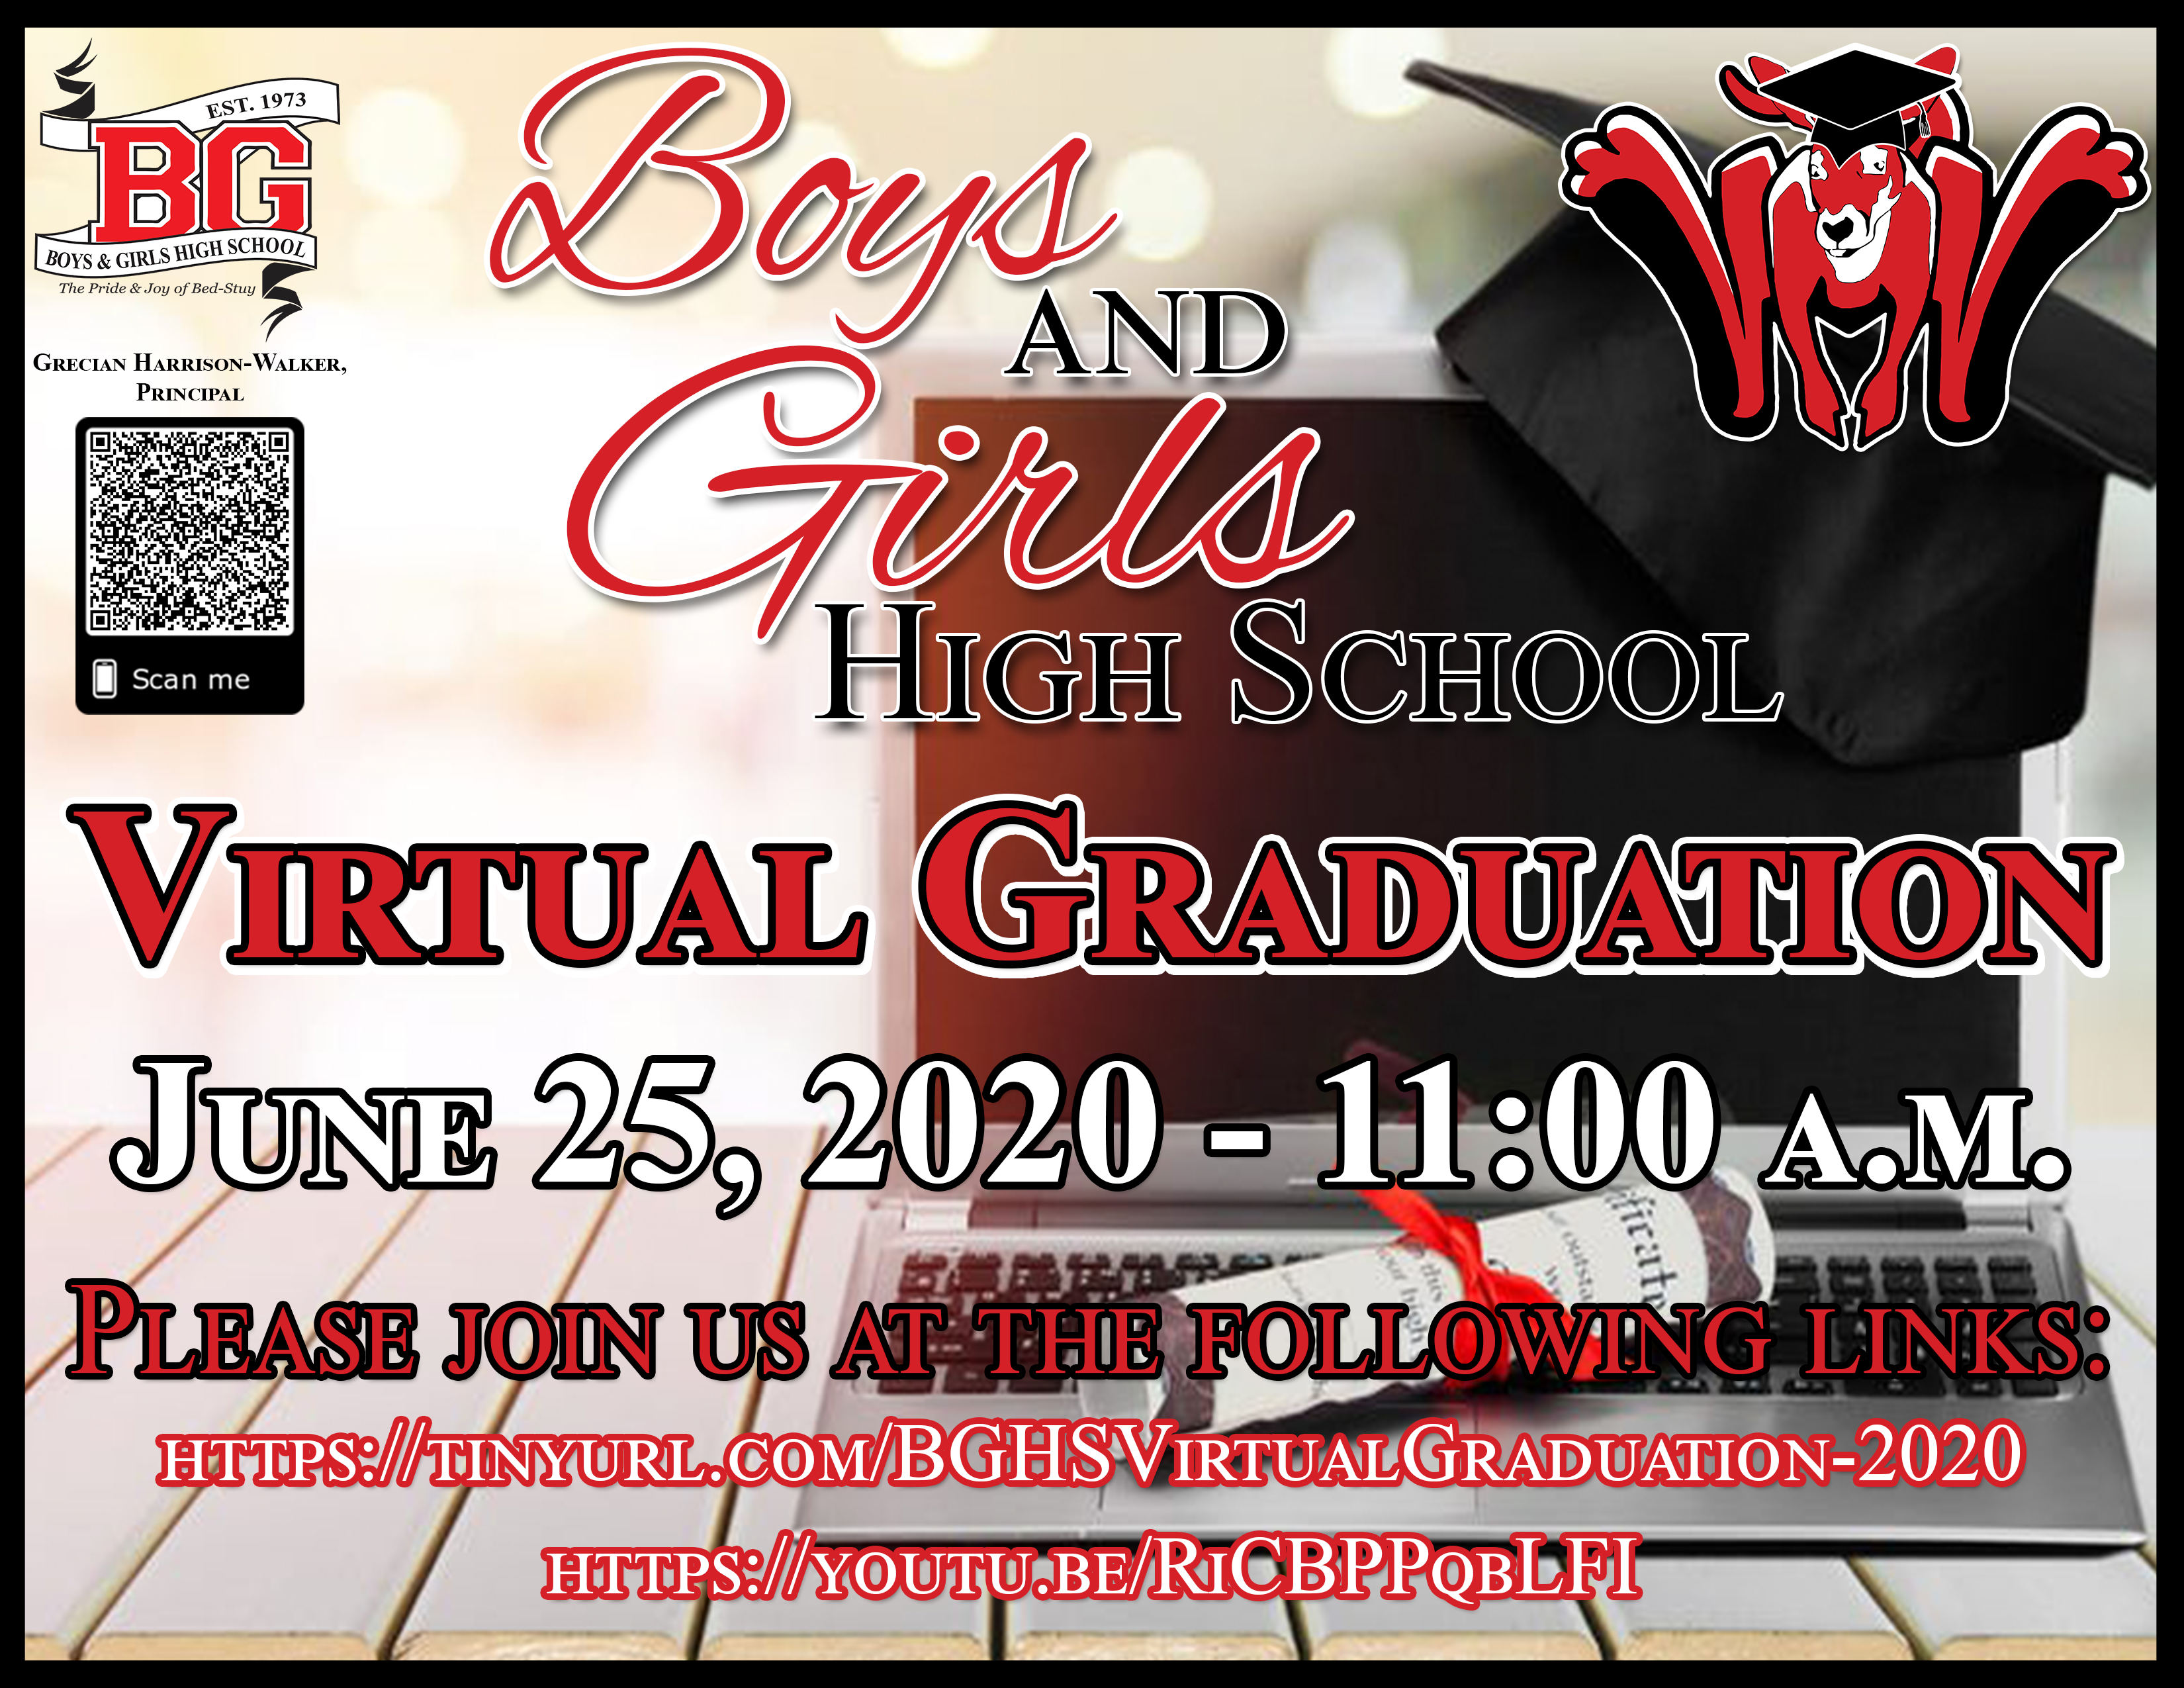 BGHS Virtual Graduation -  Save the Date